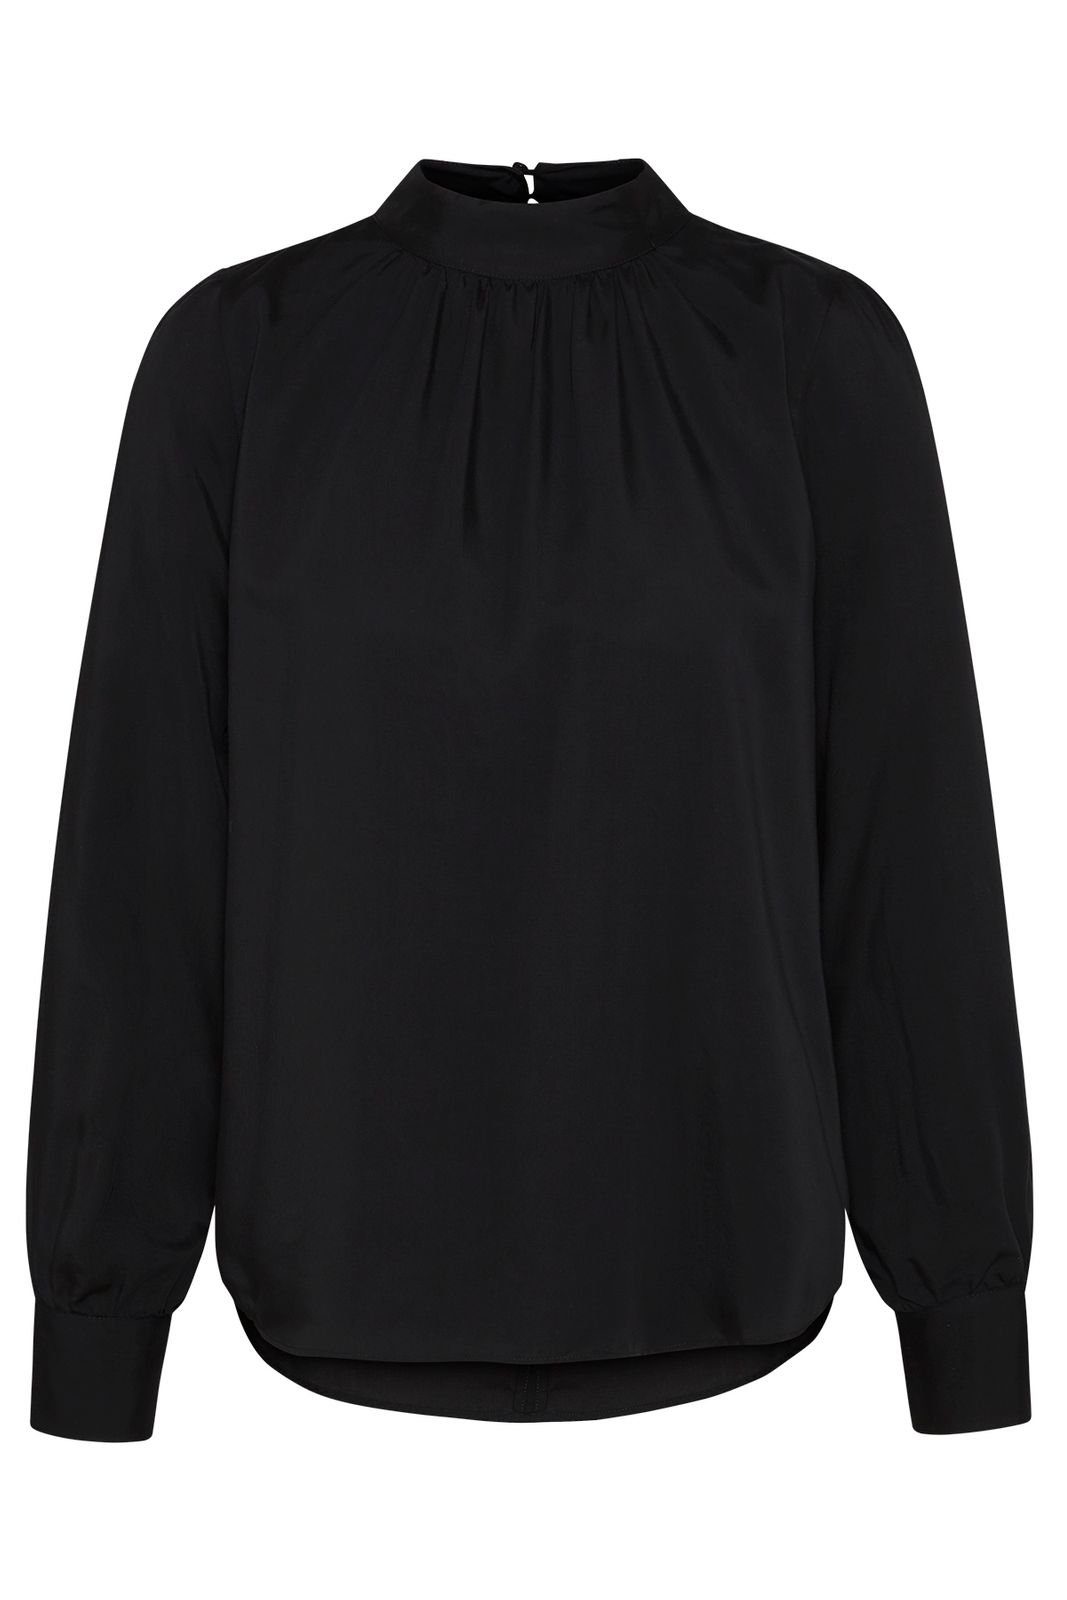 wunderwerk Klassische Bluse TENCEL turtleneck blouse 900 - black